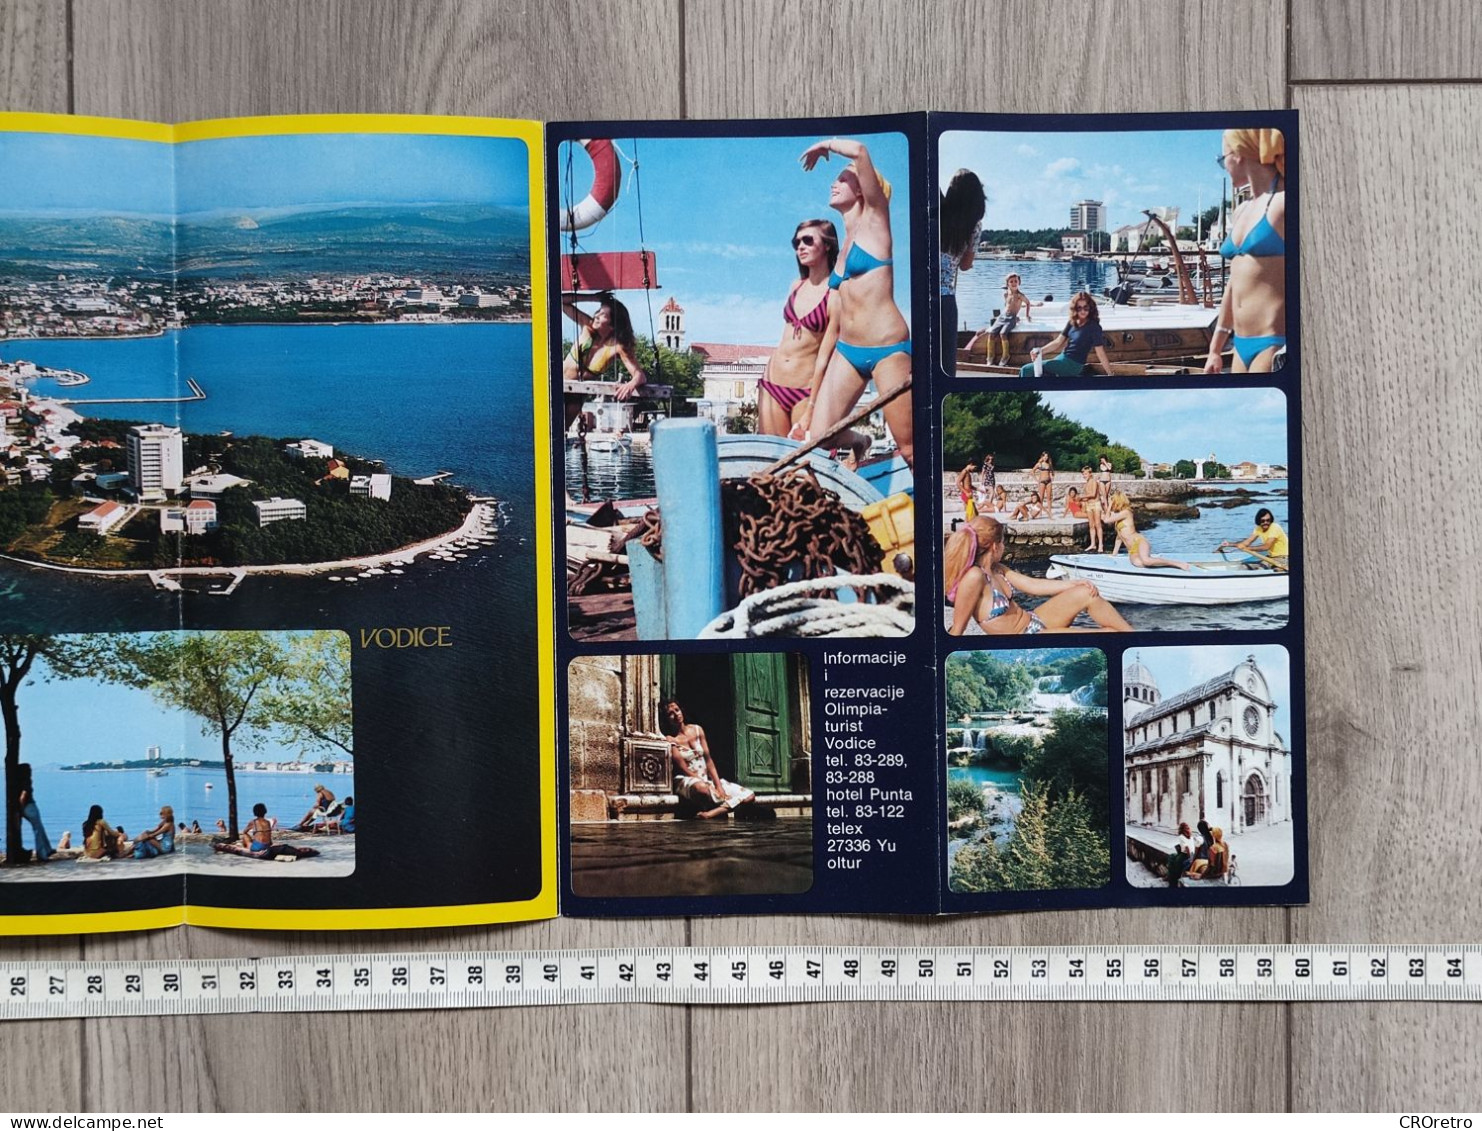 VODICE - CROATIA (ex Yugoslavia) - Hotel "Punta", vintage tourism brochure, prospect, guide